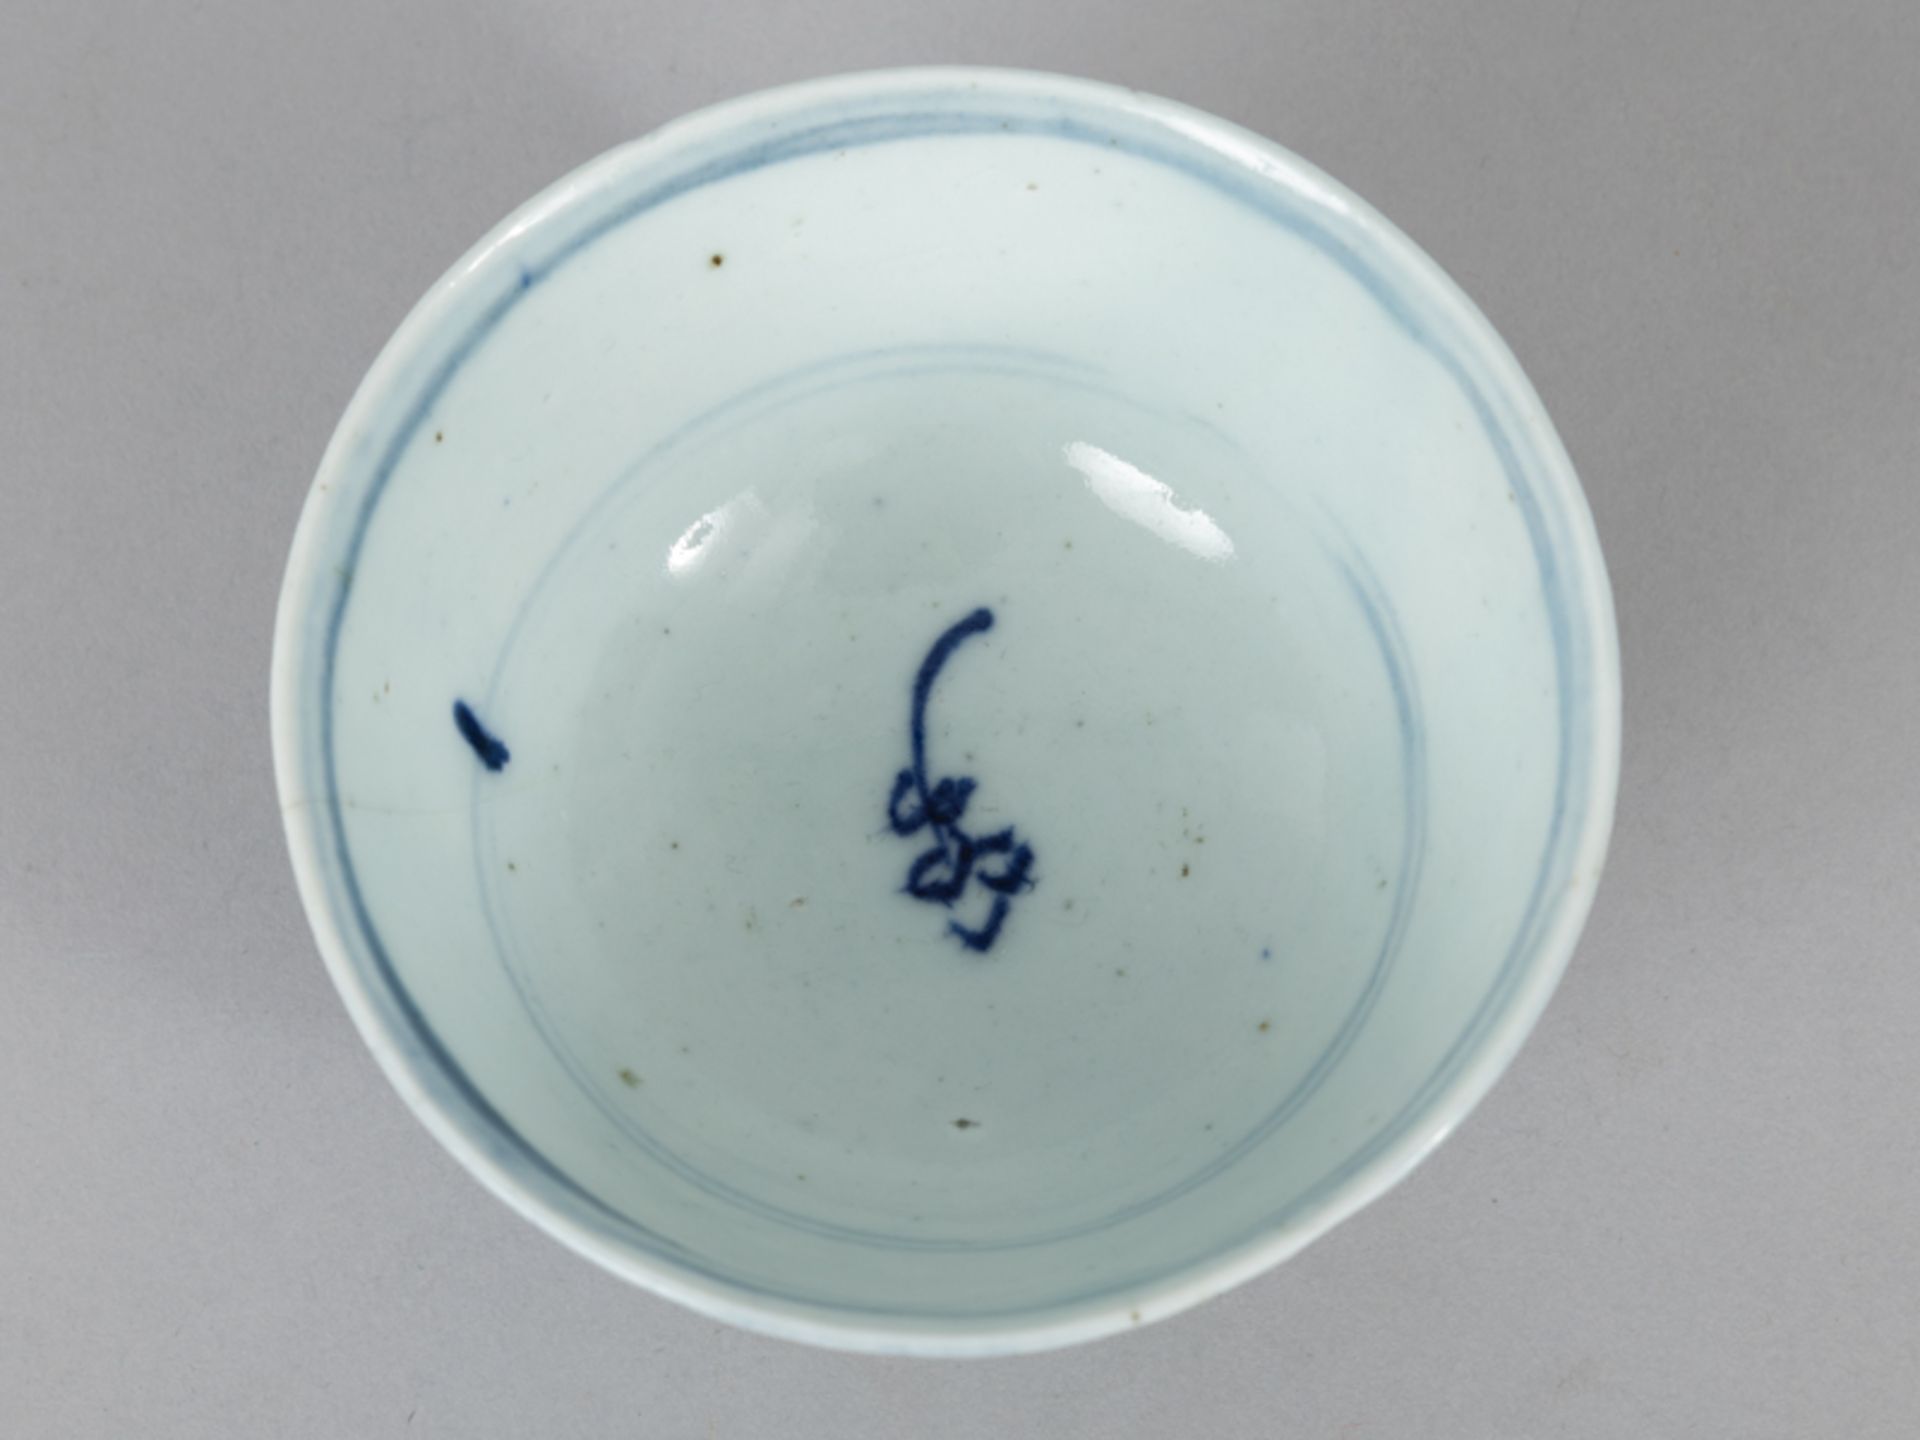 Kleine Schale / Kumme / Teeschale, China, wohl Qing-Dynastie, 18. Jh. - Image 3 of 6